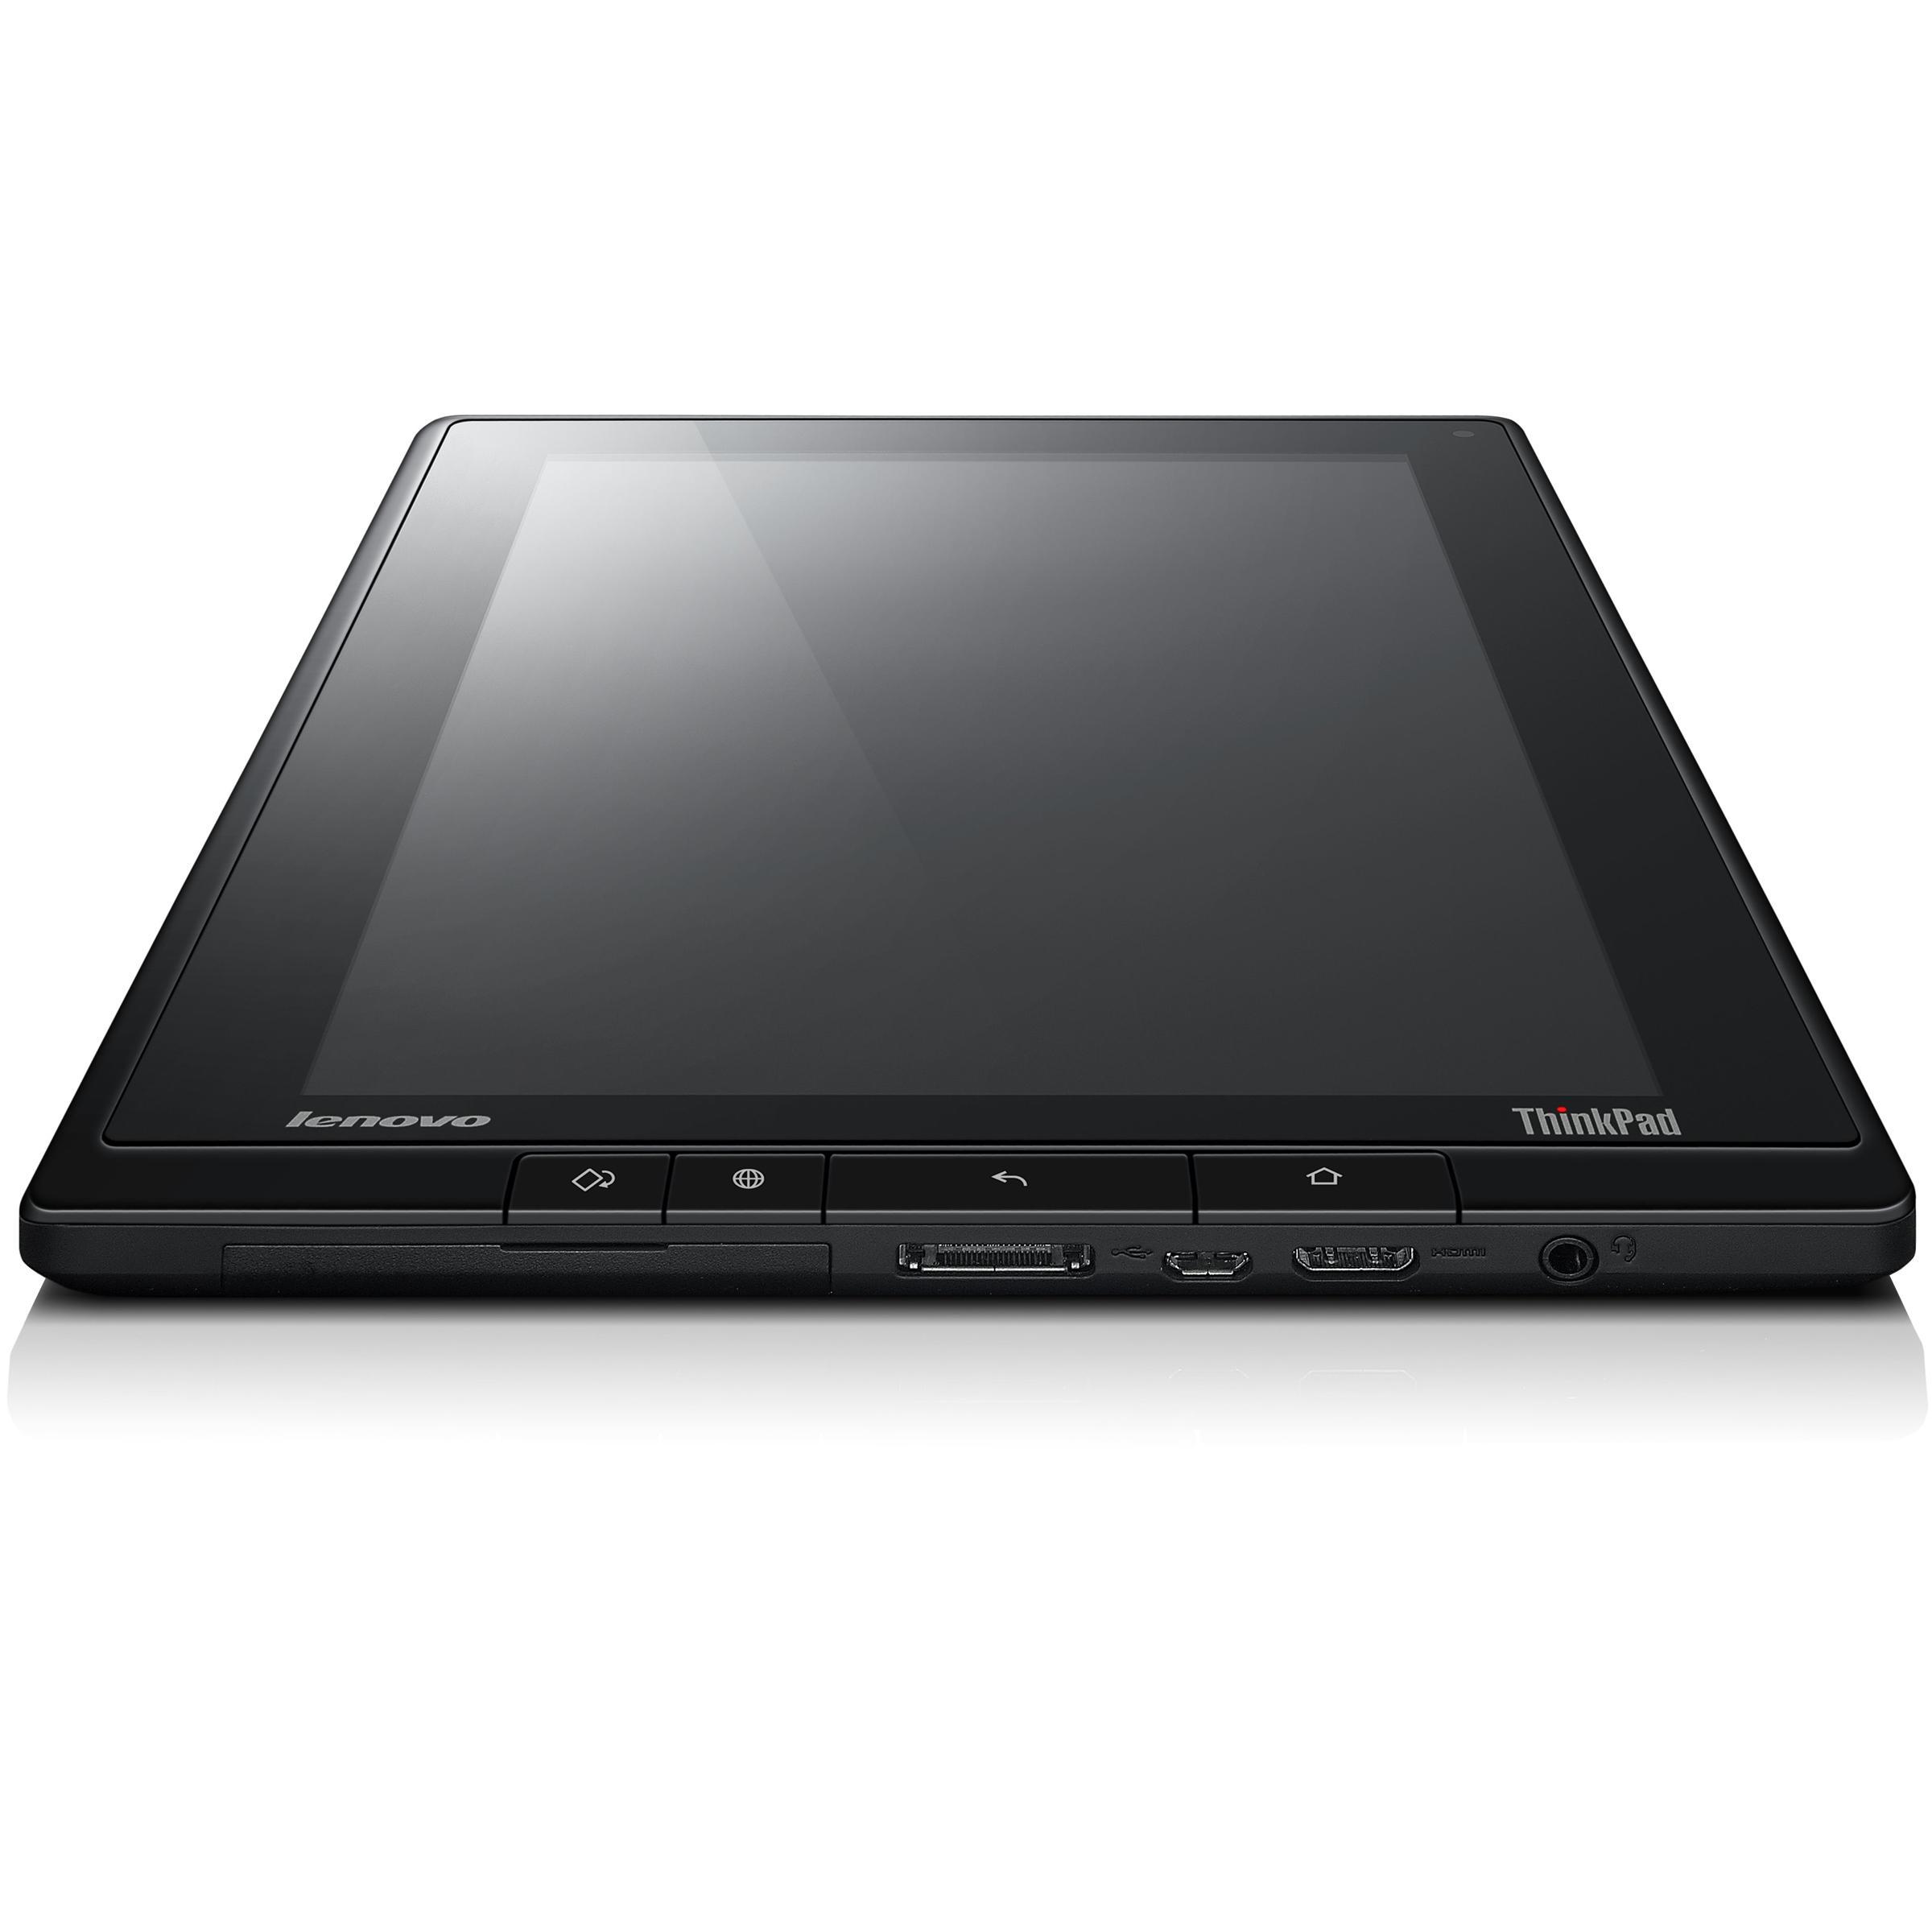 Lenovo thinkpad tablet 1839 flash download tools esp32